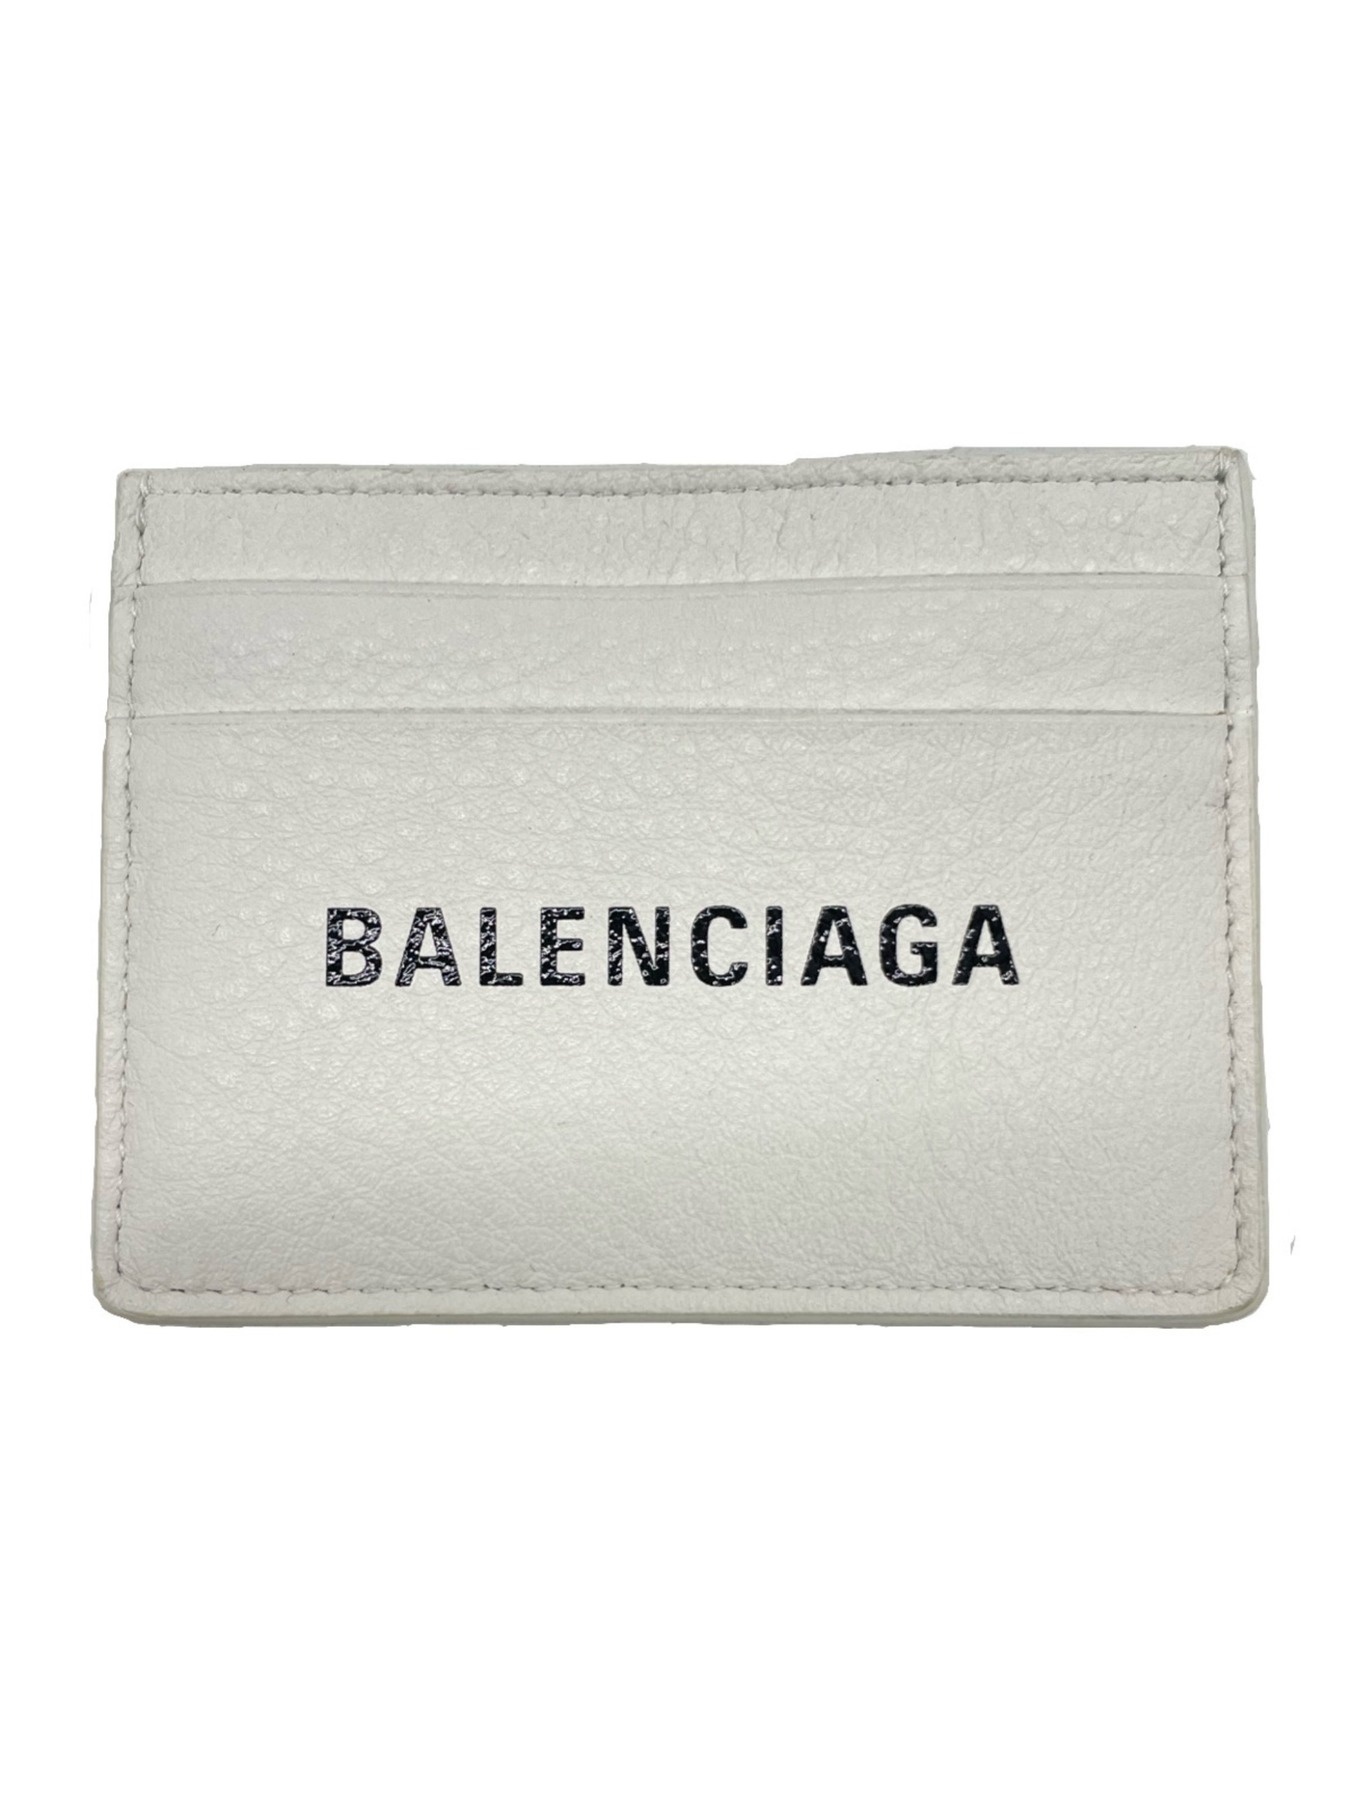 BALENCIAGA (バレンシアガ) パスケース ホワイト